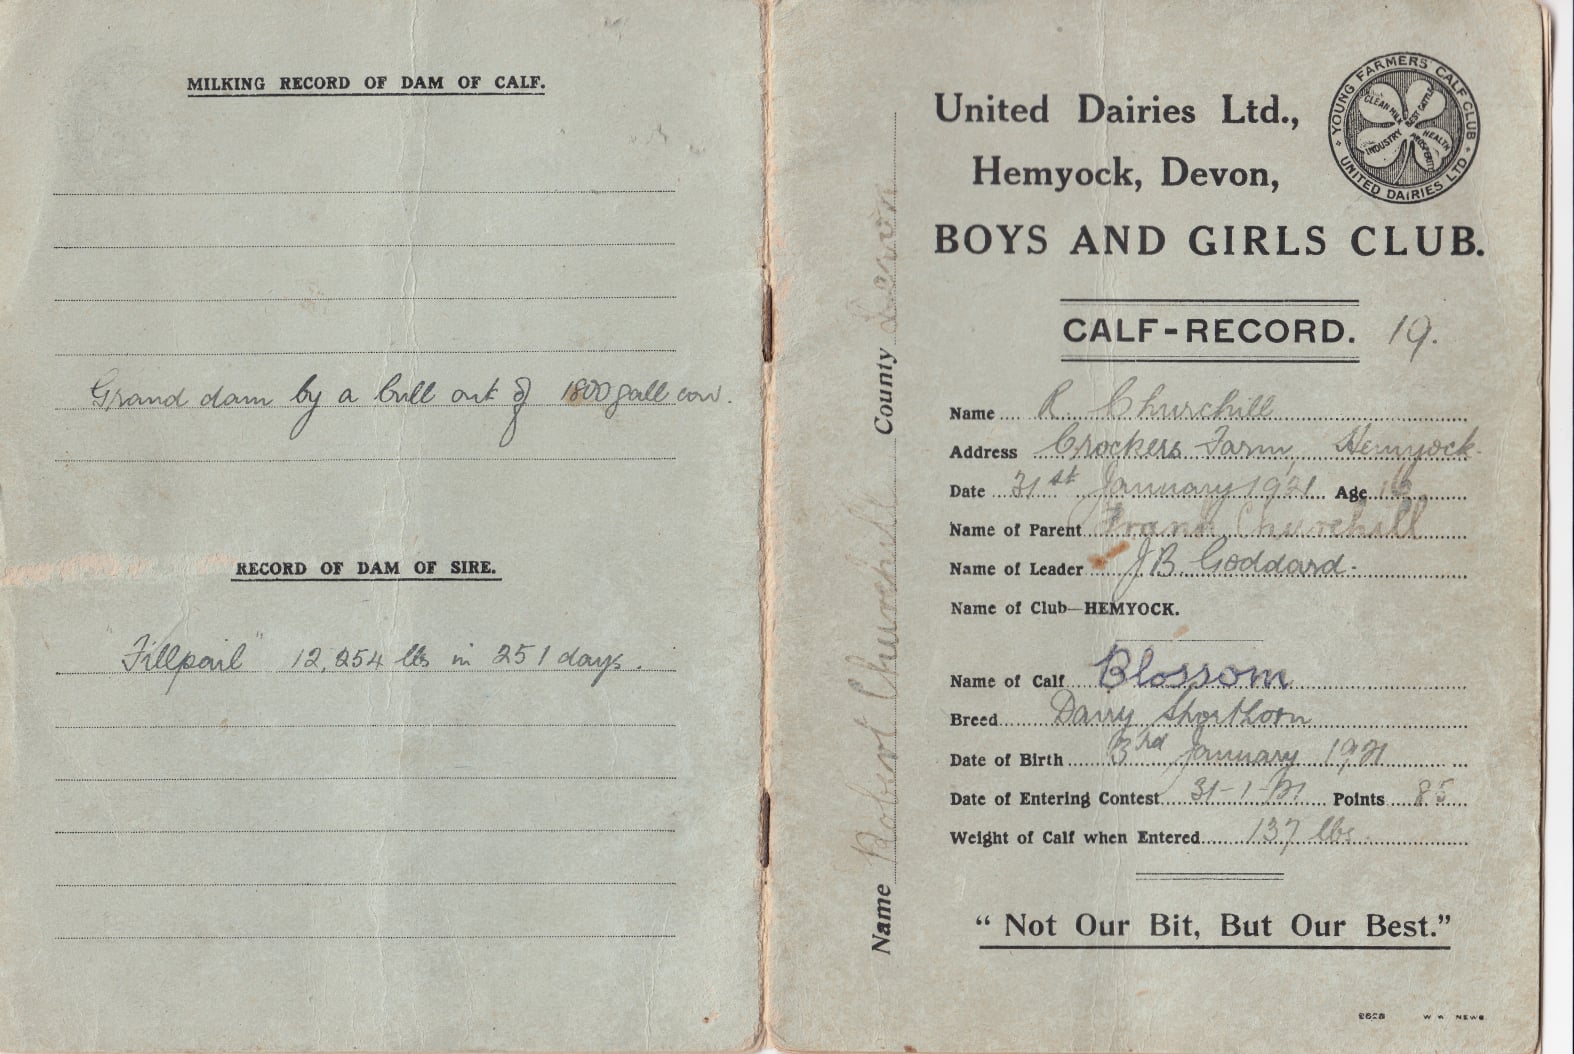 Robert Churchill’s Calf Club Calf-Record from January 1921 for 'Blossom' Reproduced from the Calf Club Centenary Facebook Group, Hemyock